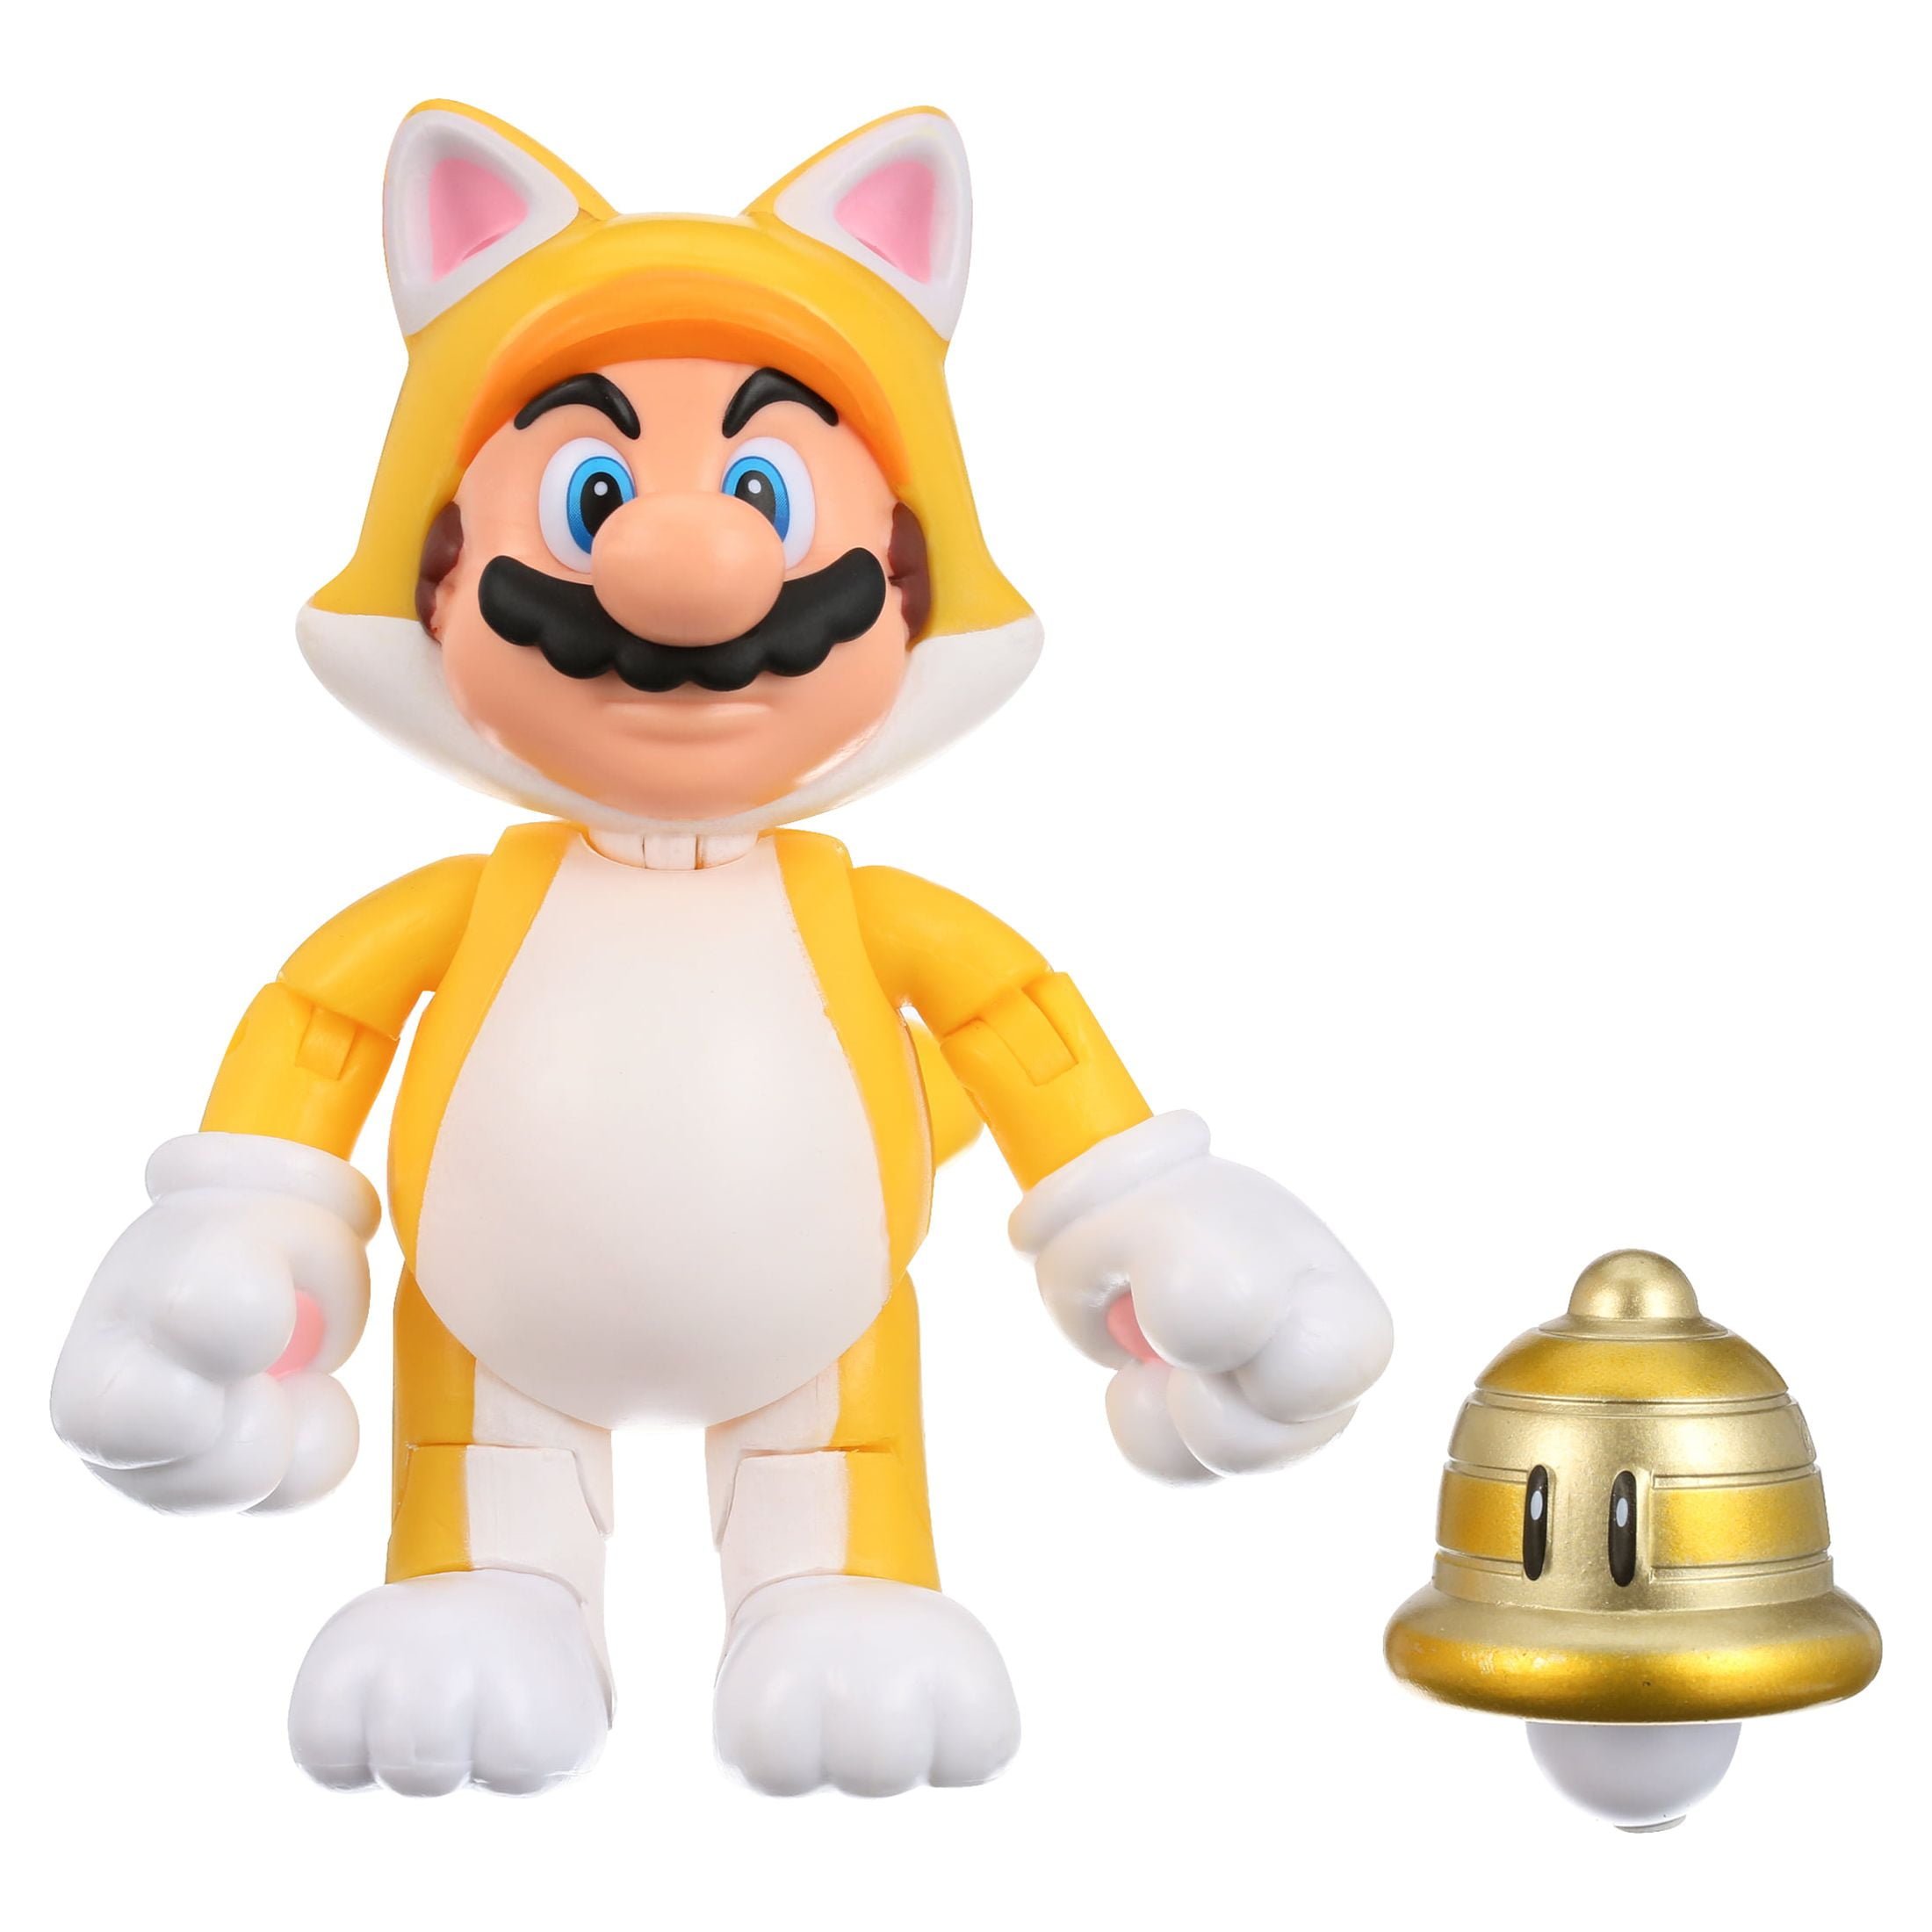 World of Nintendo 4 Figure: Cat Mario